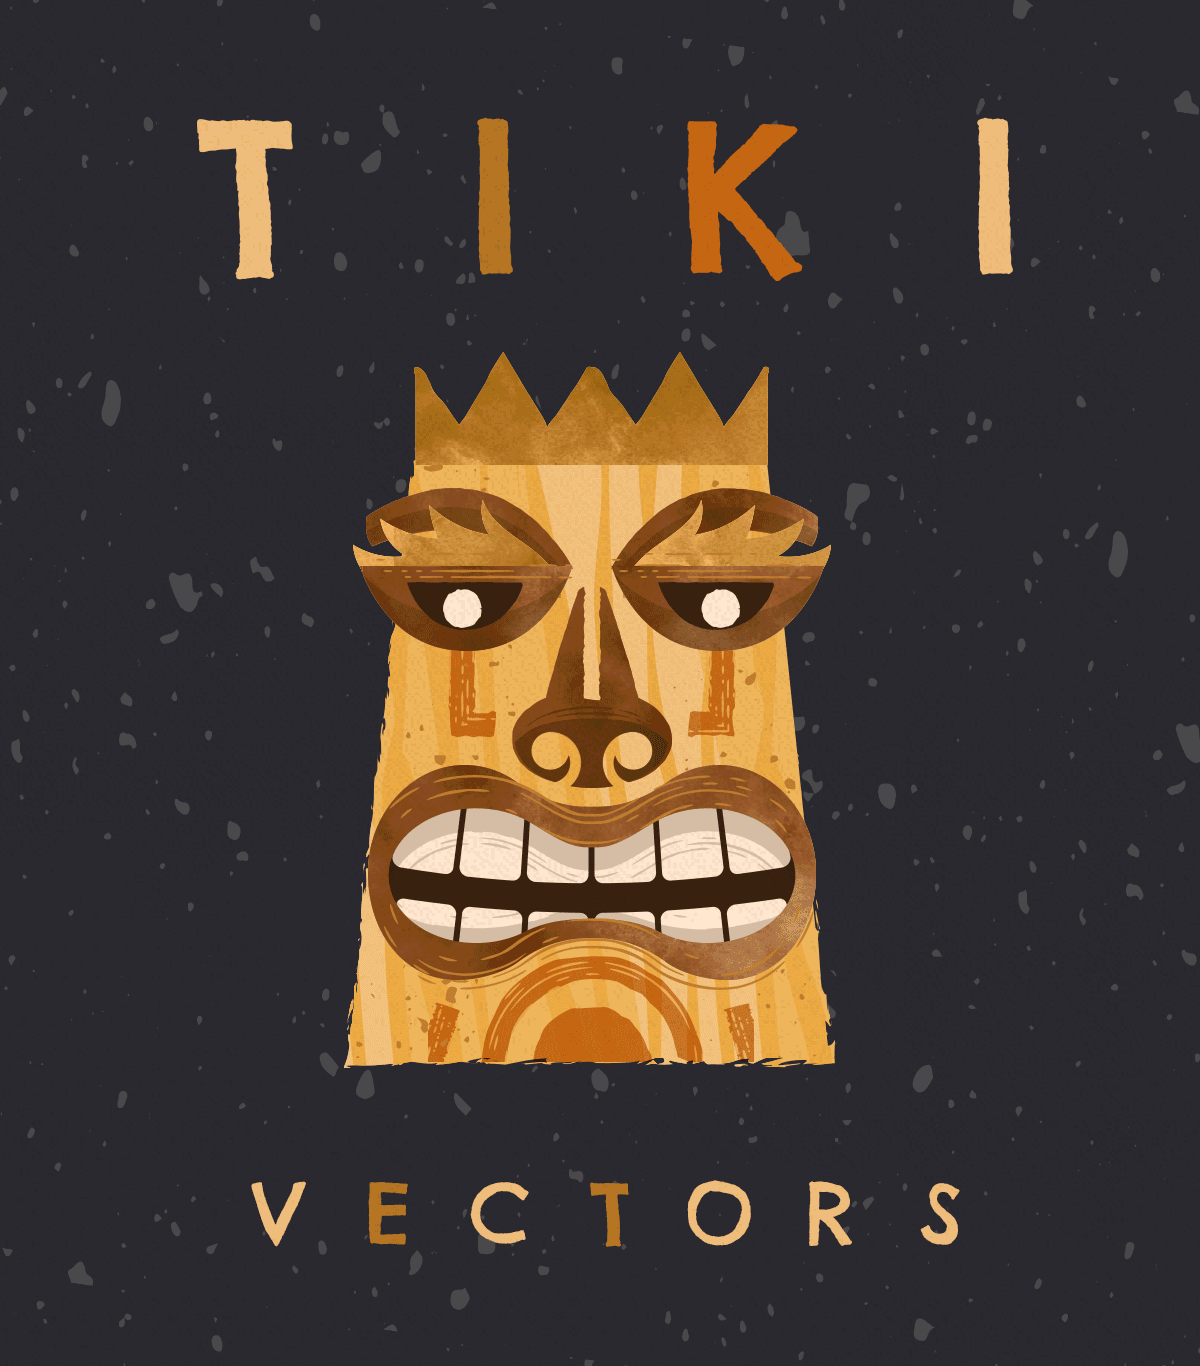 Tiki Vector Illustrations